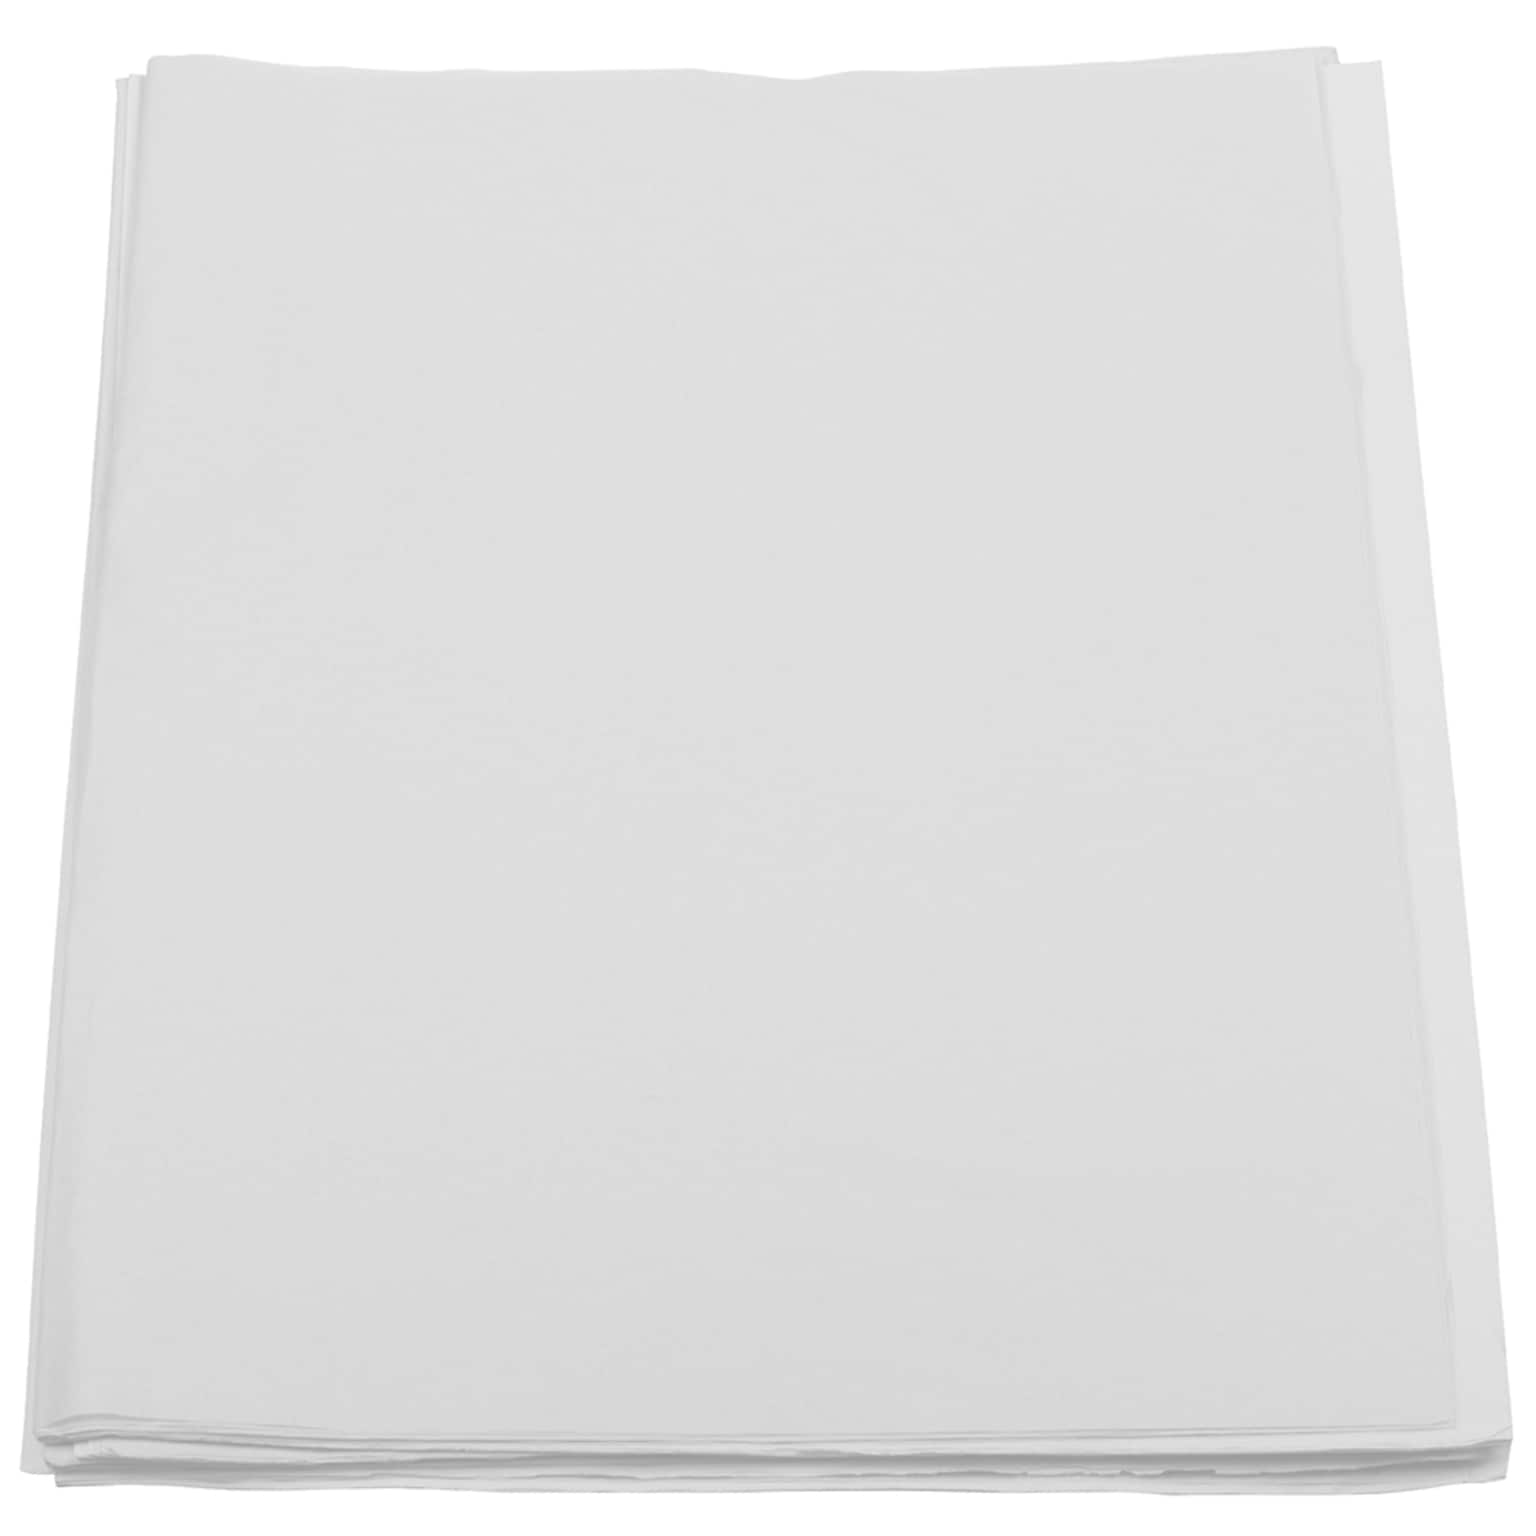 JAM Paper Tissue Paper, White, 480 Sheets/Pack (1152390)